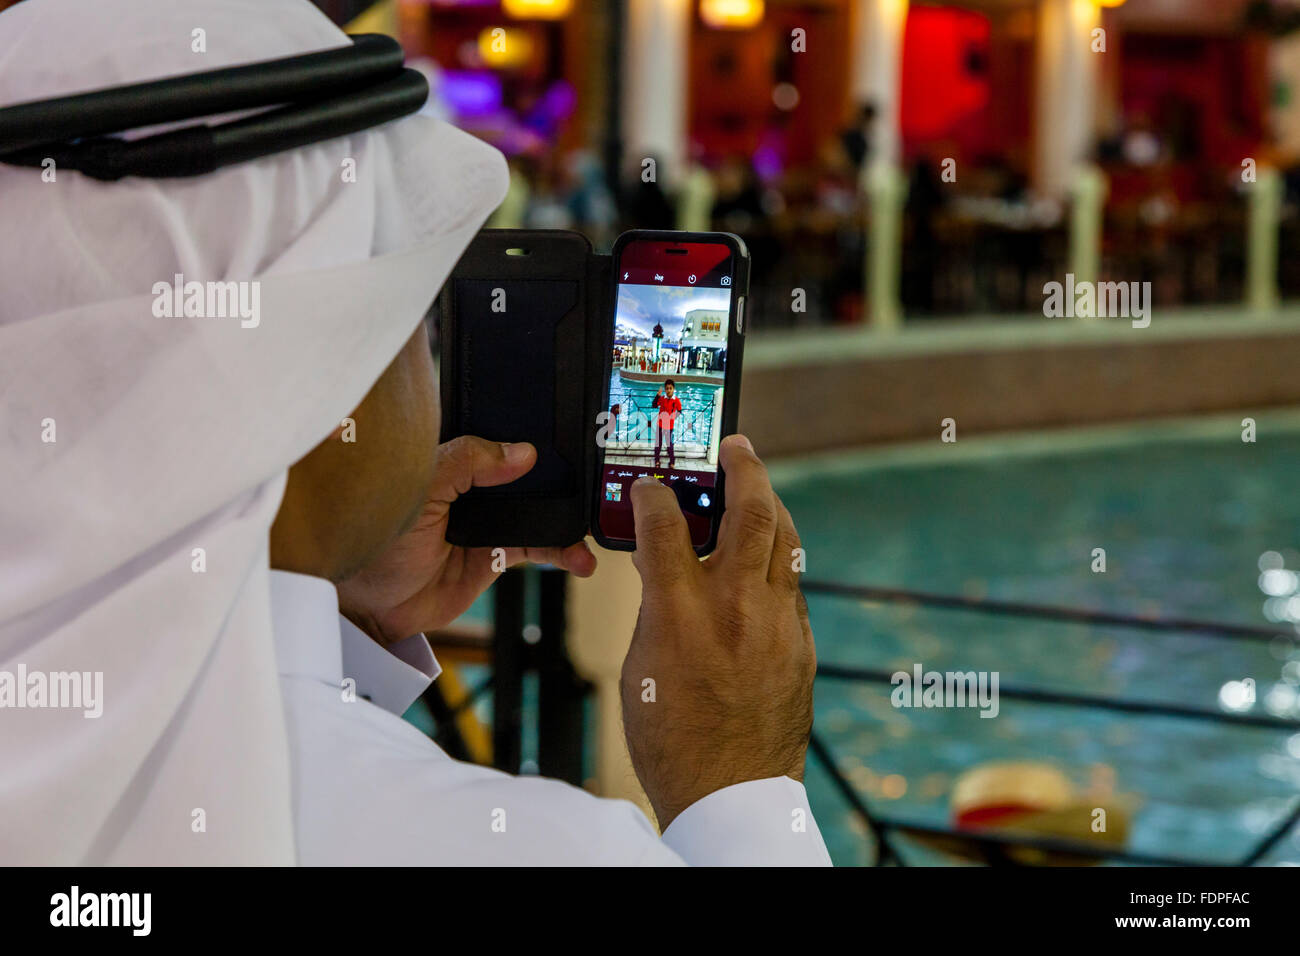 A Local Man Takes Photos Of His Family On His Cell/Mobile Phone, Villaggio Shopping Mall, Doha, Qatar Stock Photo